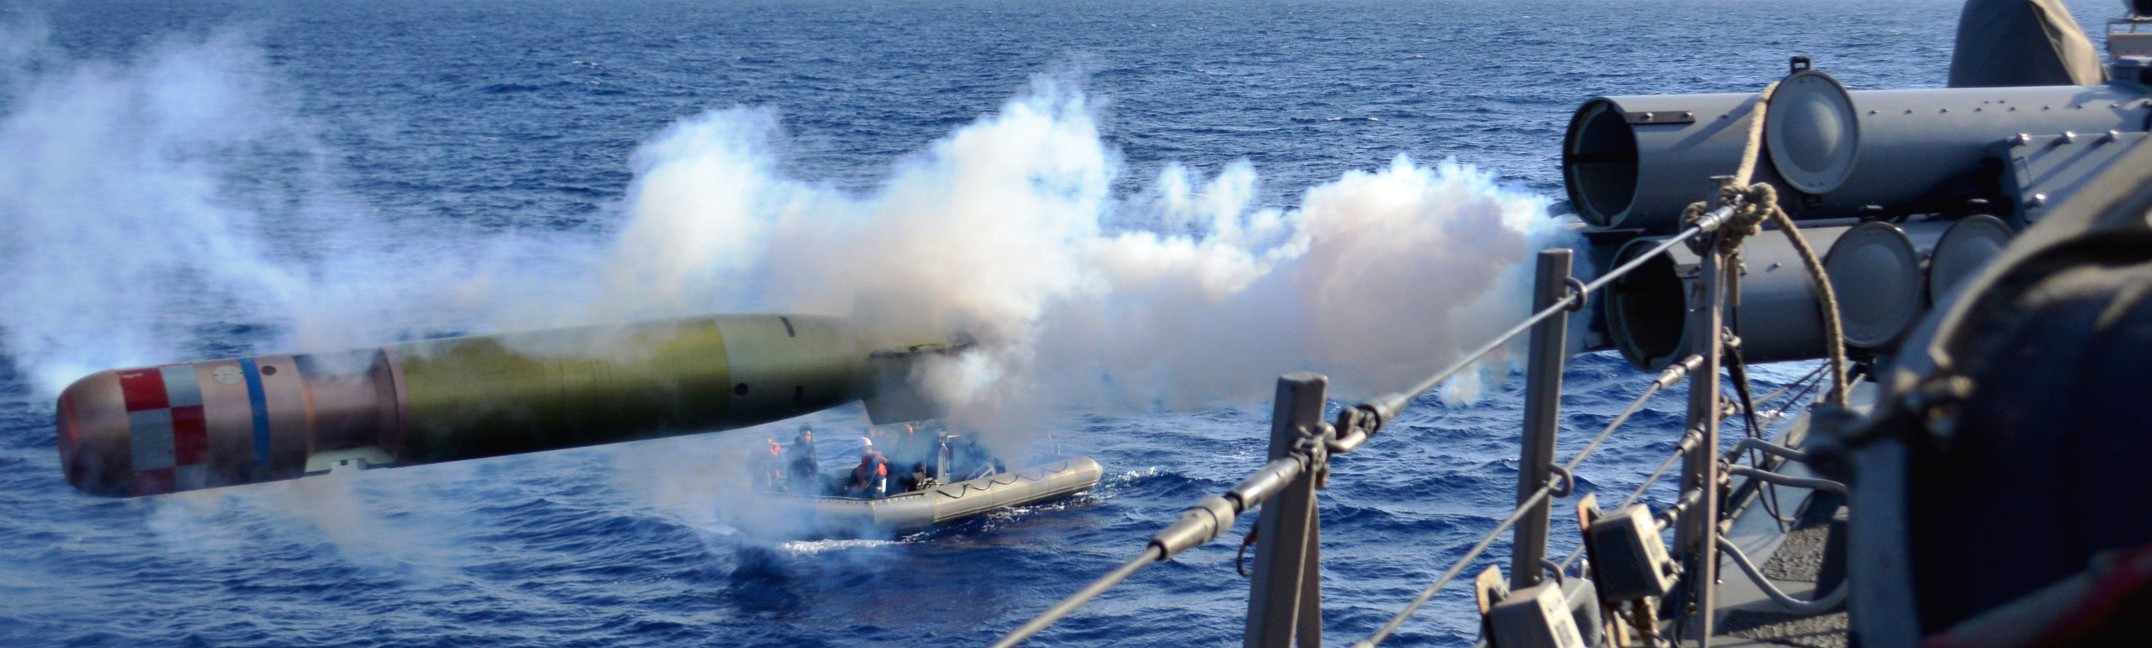 ddg-61 uss ramage guided missile destroyer us navy 15 mk.46 torpedo exercise